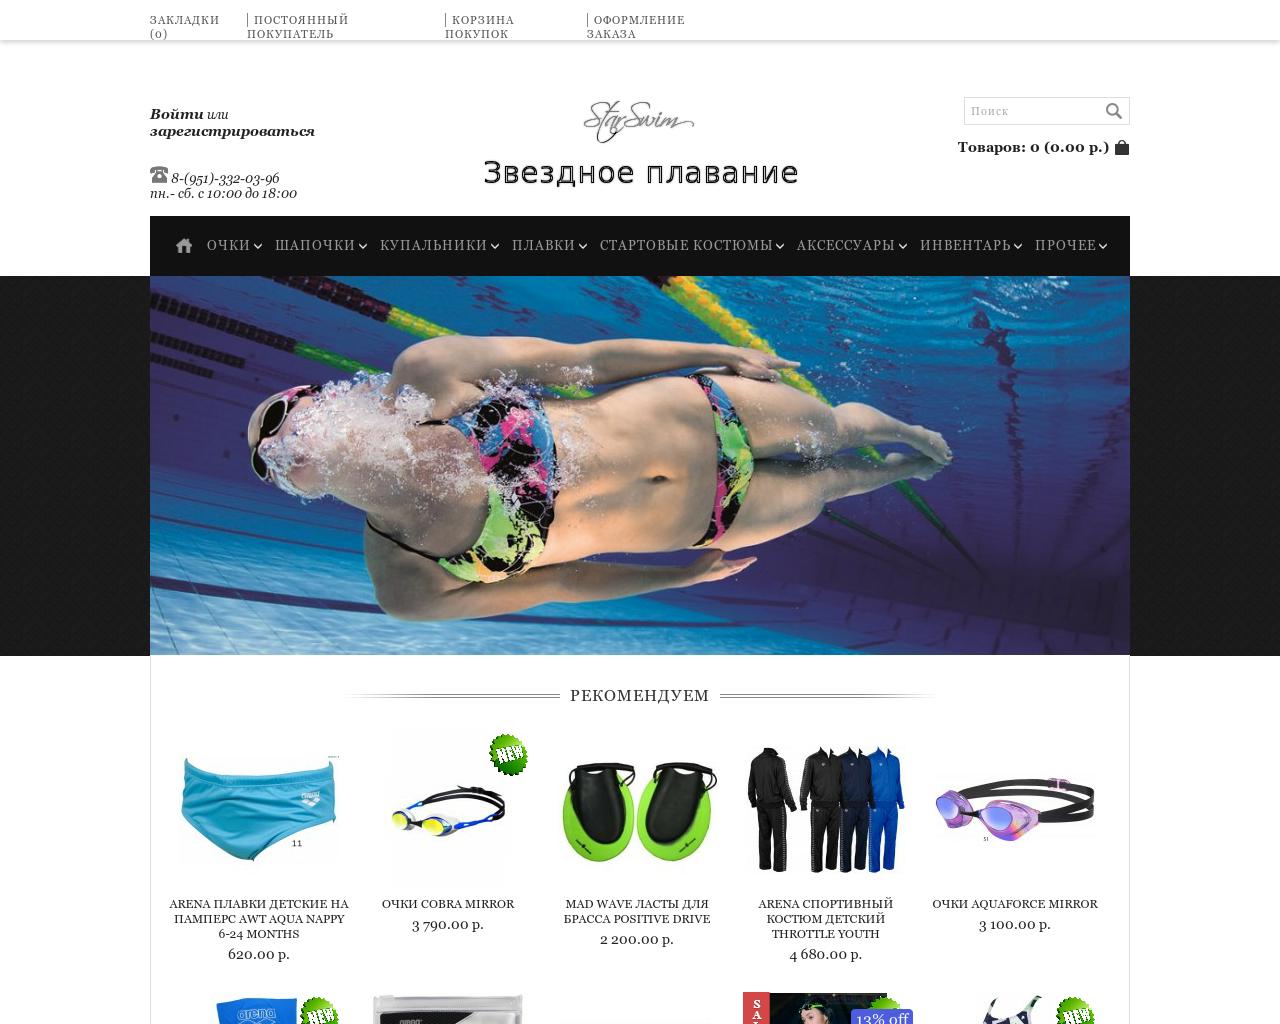 Изображение сайта starswim.ru в разрешении 1280x1024